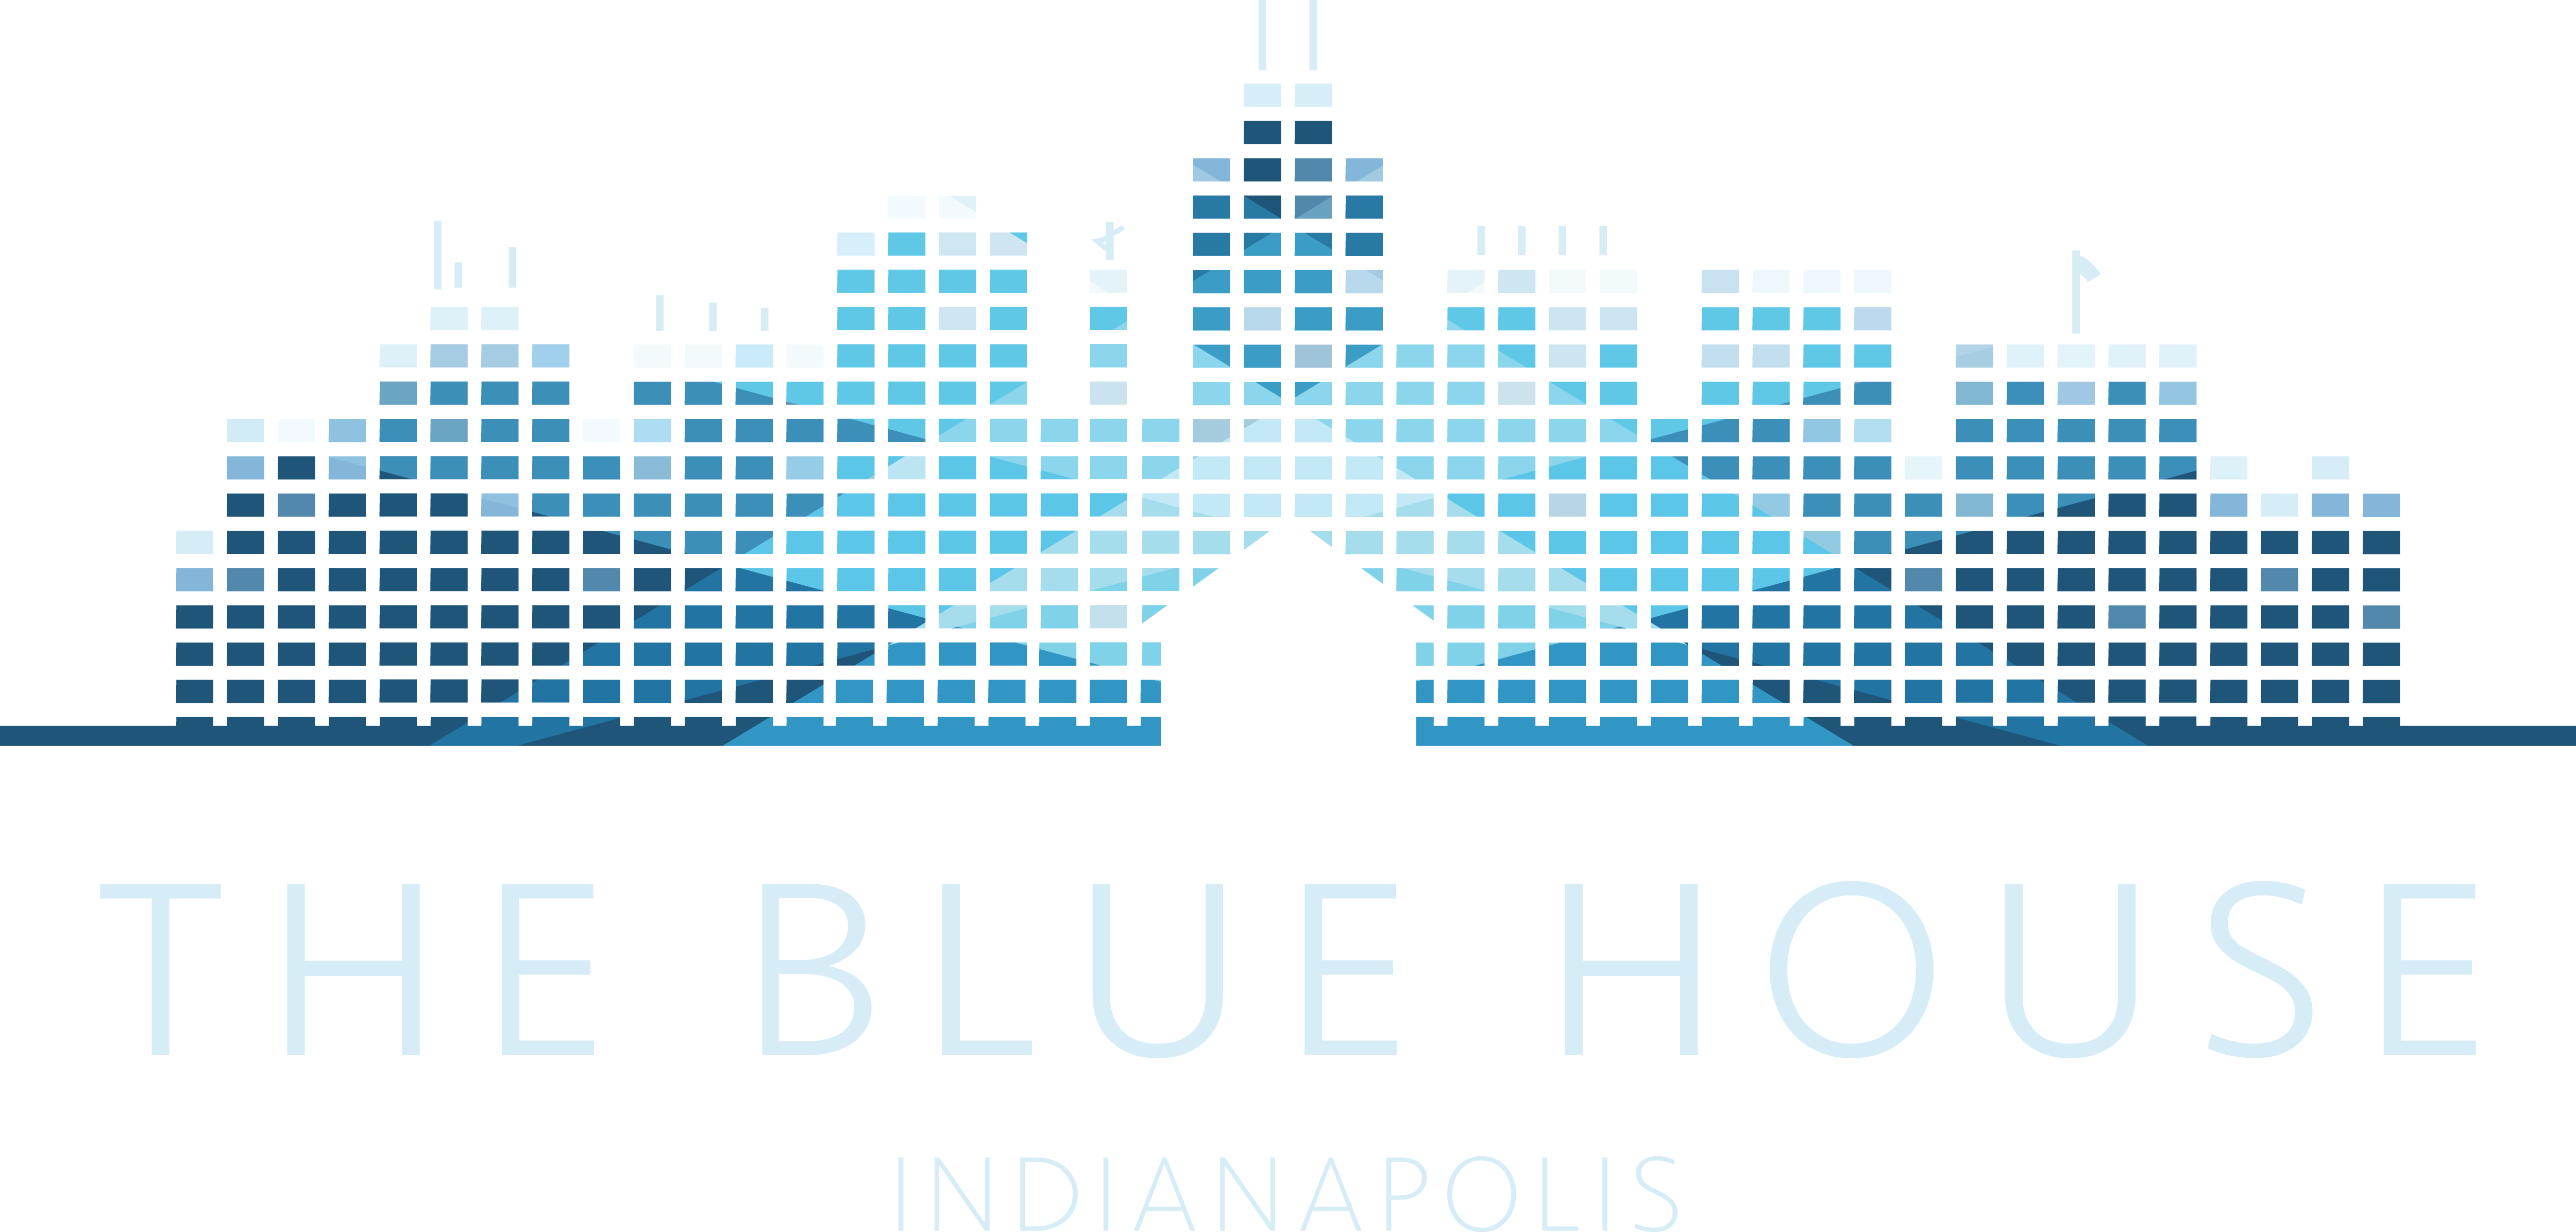 Blue House Logo - The Blue House. Where entrepreneurship, art, and technology meet